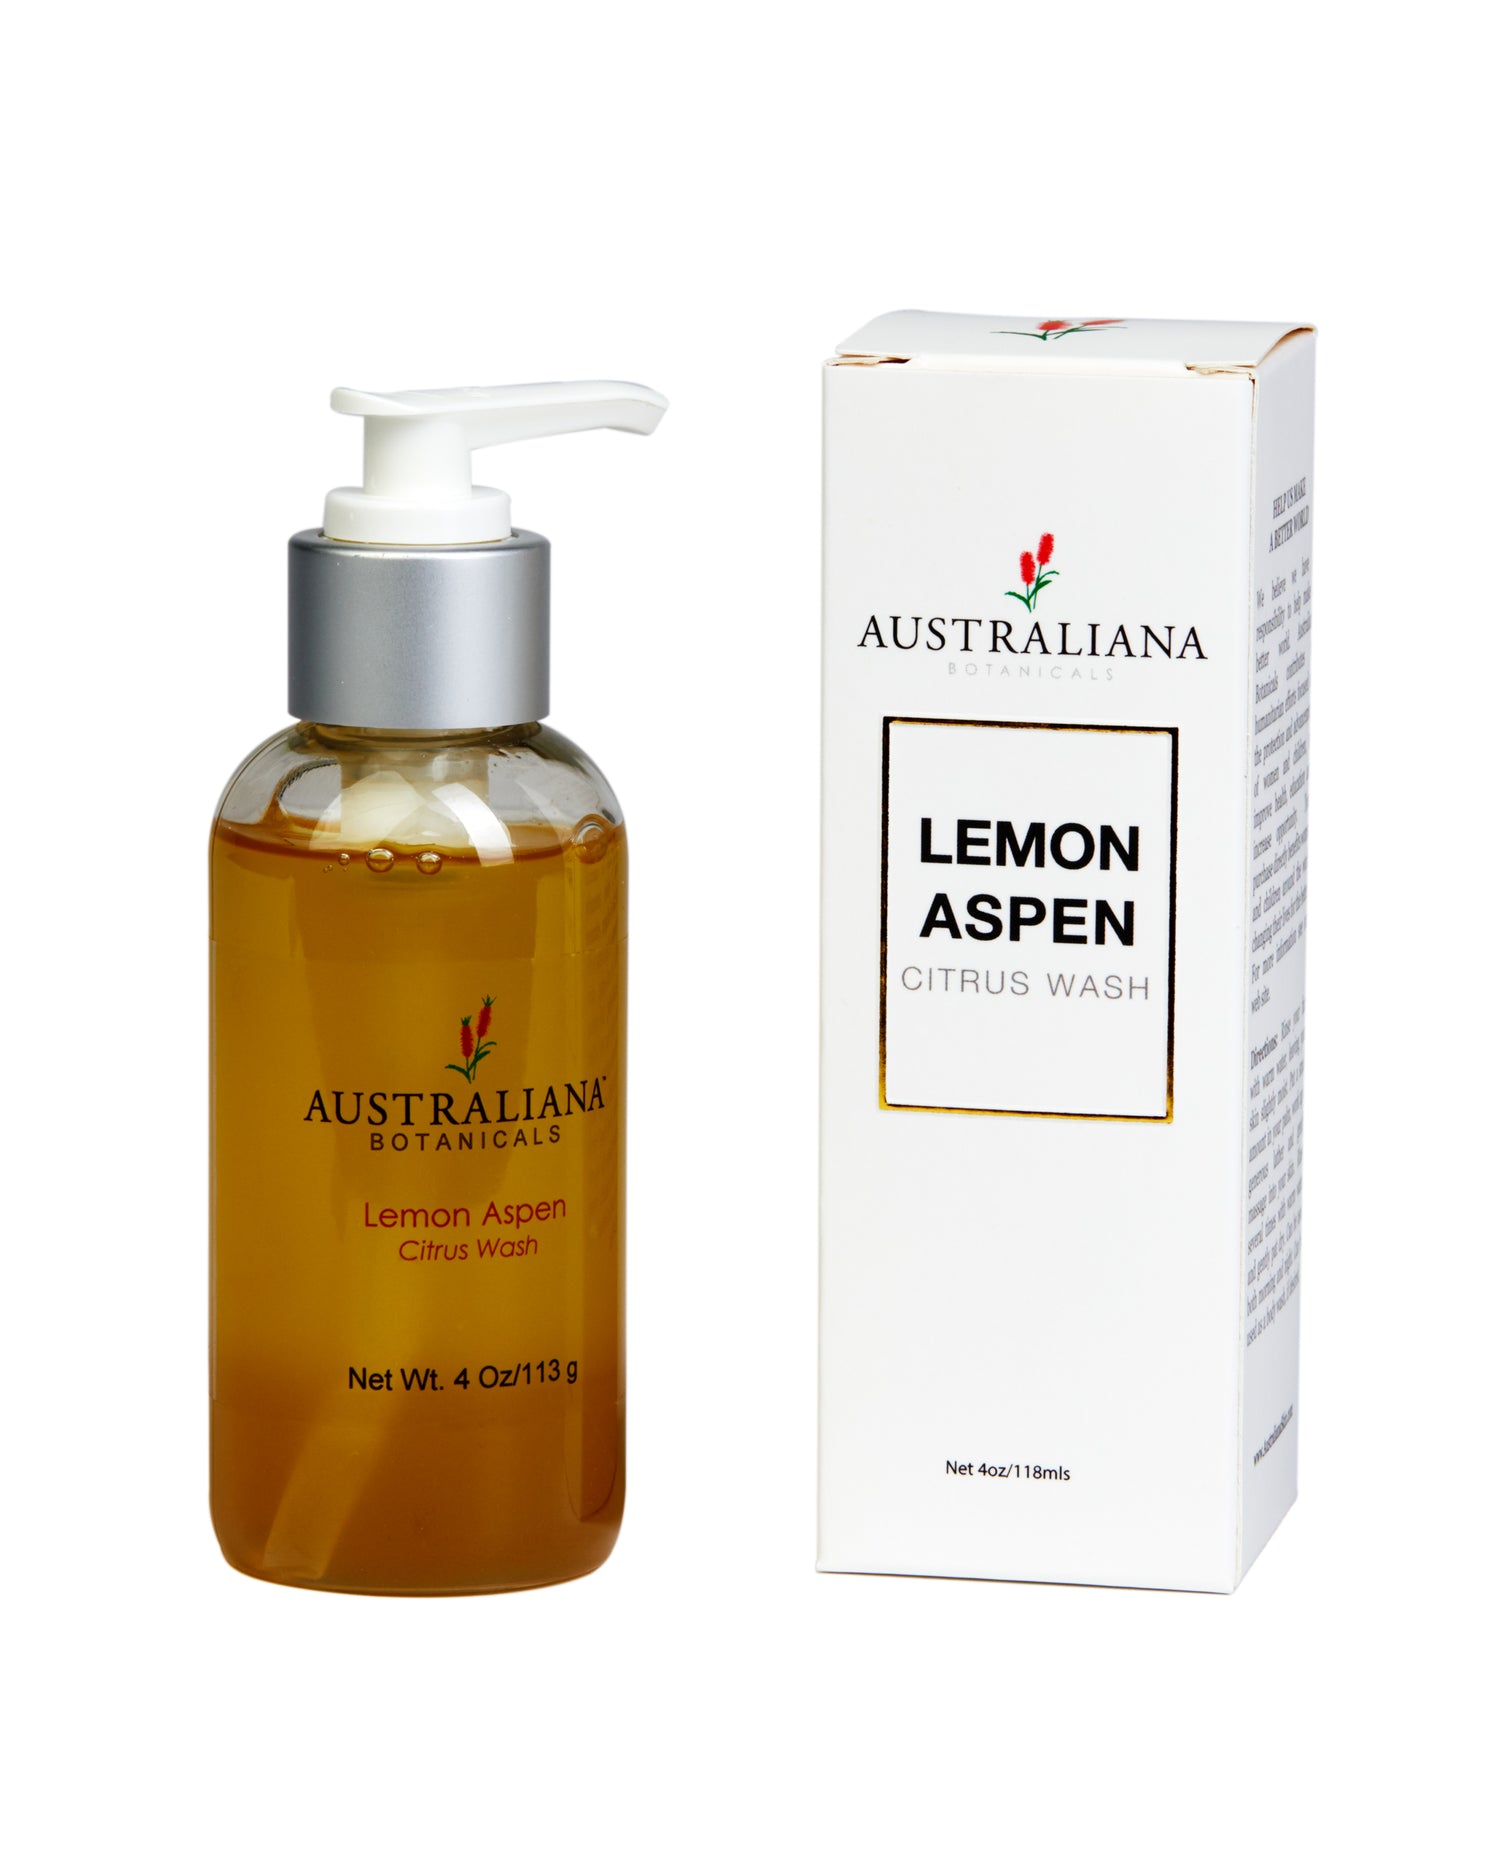 Image of Lemon Aspen Citrus Wash for blog post on skin care cleansing for acne sufferers.